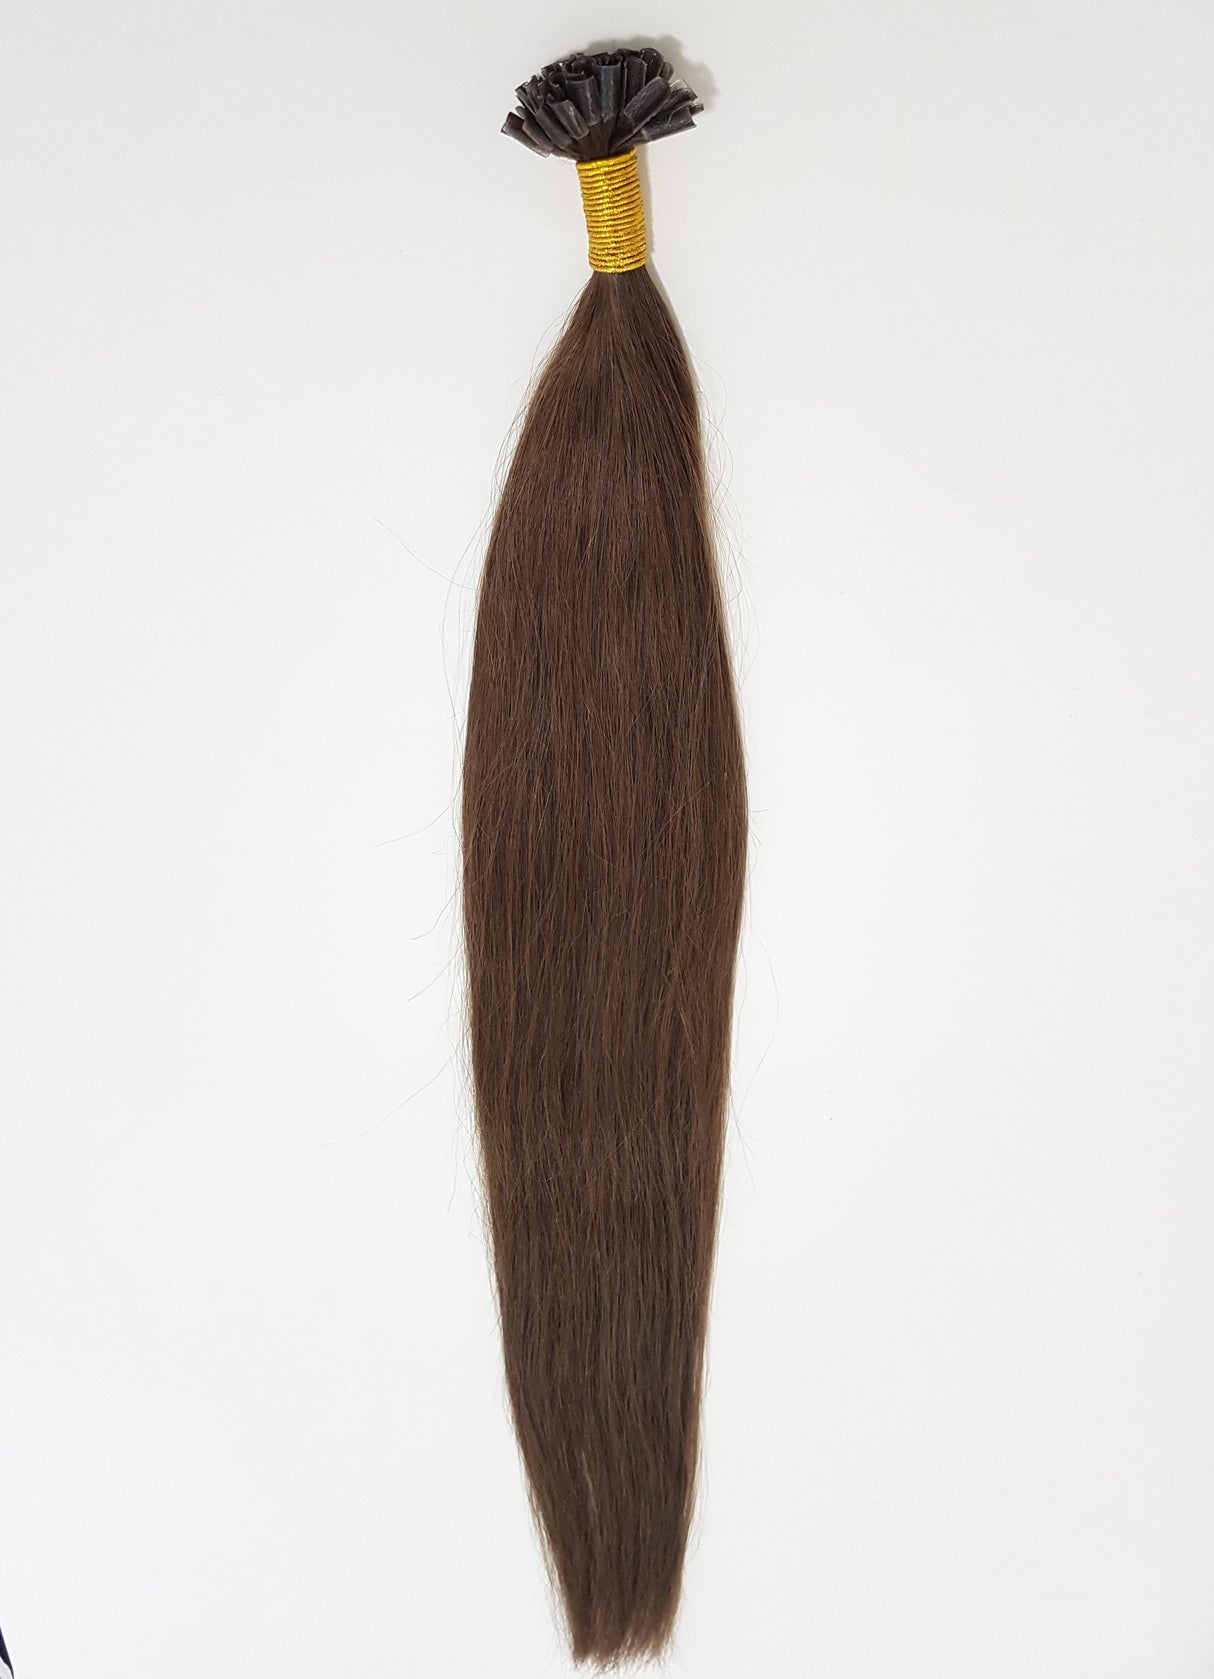 Nail/U Tip Hair Extensions Colour Chocolate Brown # 4  High Grade   24 Inches